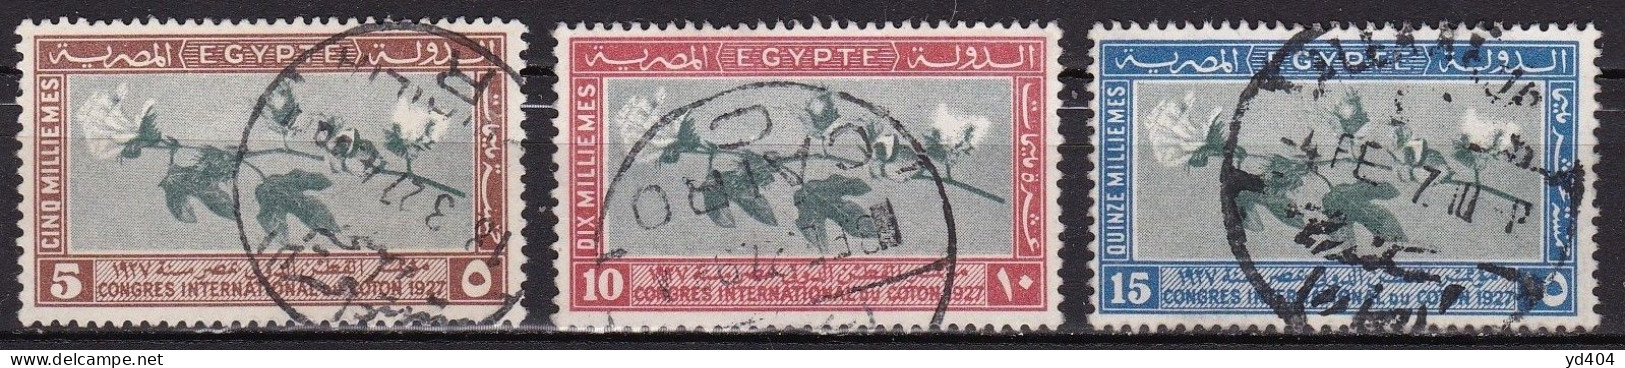 EG061 – EGYPTE – EGYPT – 1927 – INTERNATIONAL COTTON CONGRESS - Y&T # 115/117 USED - Usados